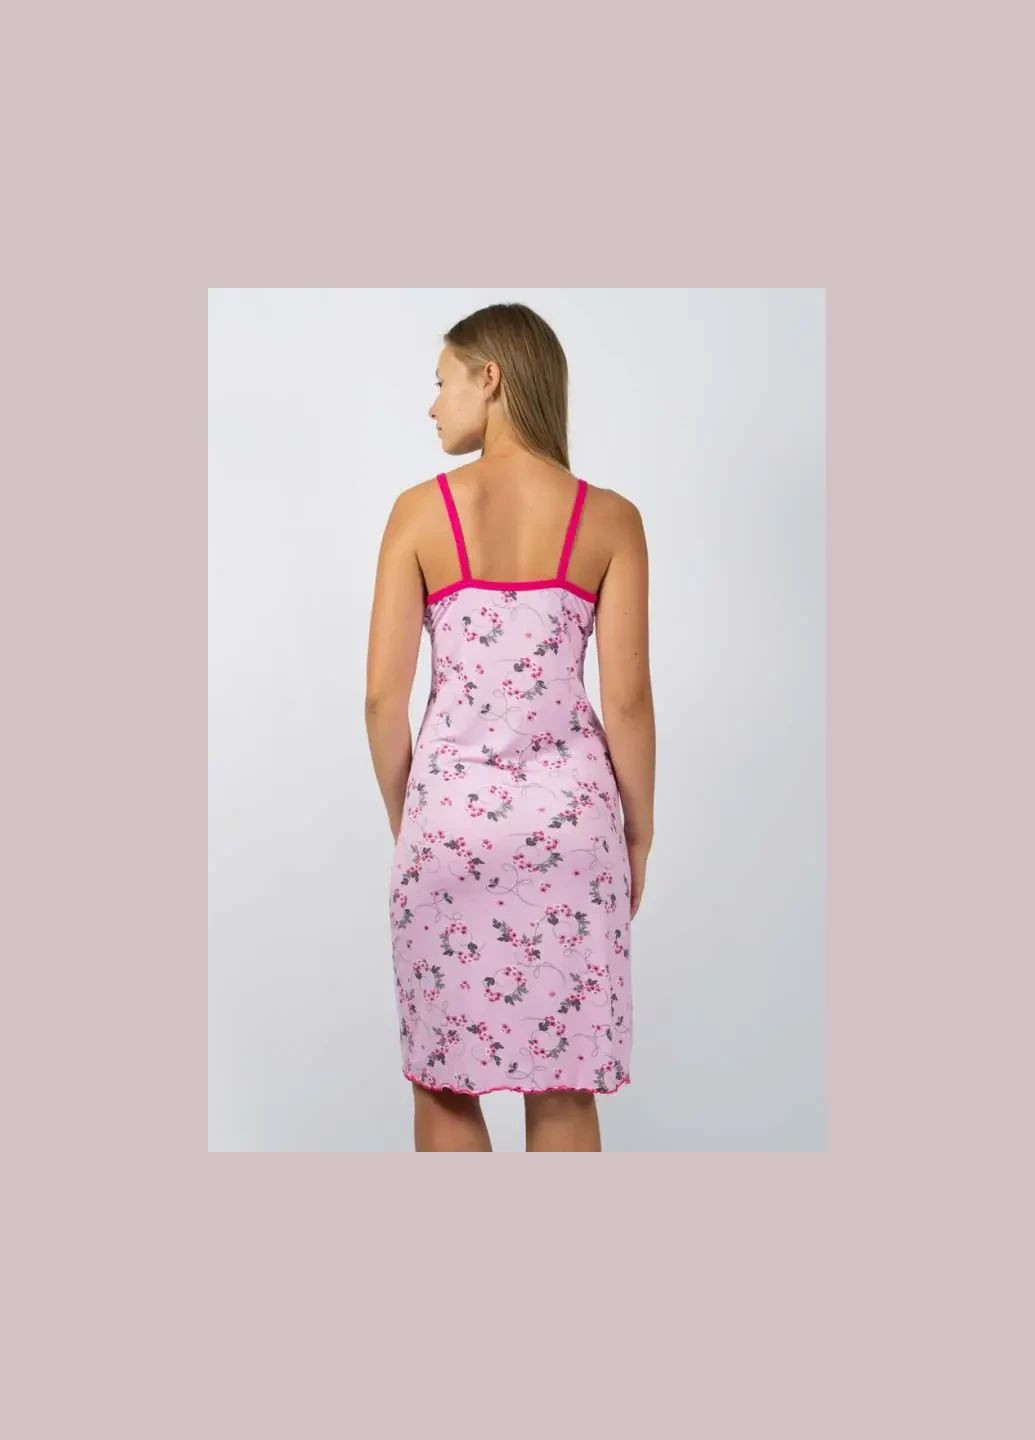 Розовый летний женская ночная рубашка - 6225 s/m сарафан Lady Lingerie